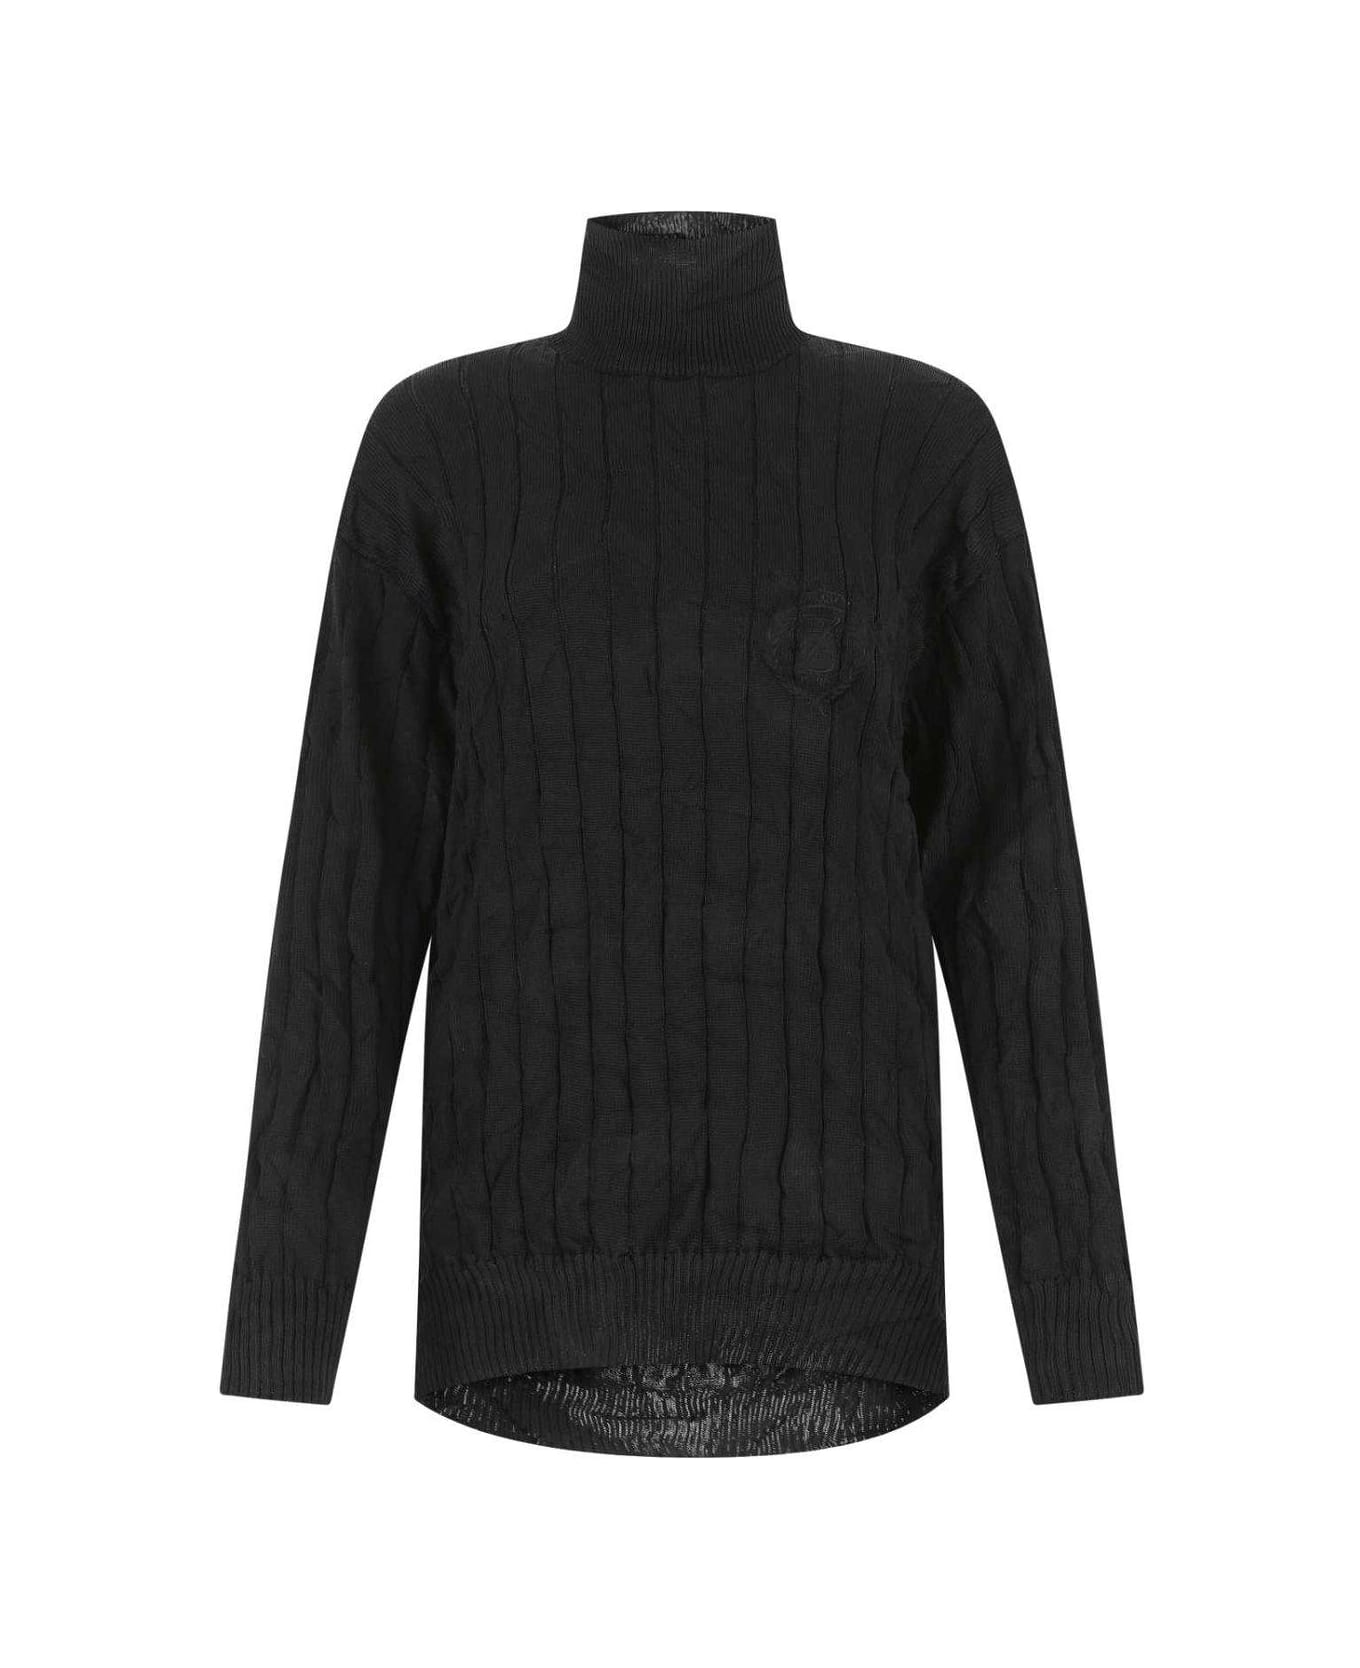 Balenciaga Creased Turtleneck Knit Jumper - BLACK